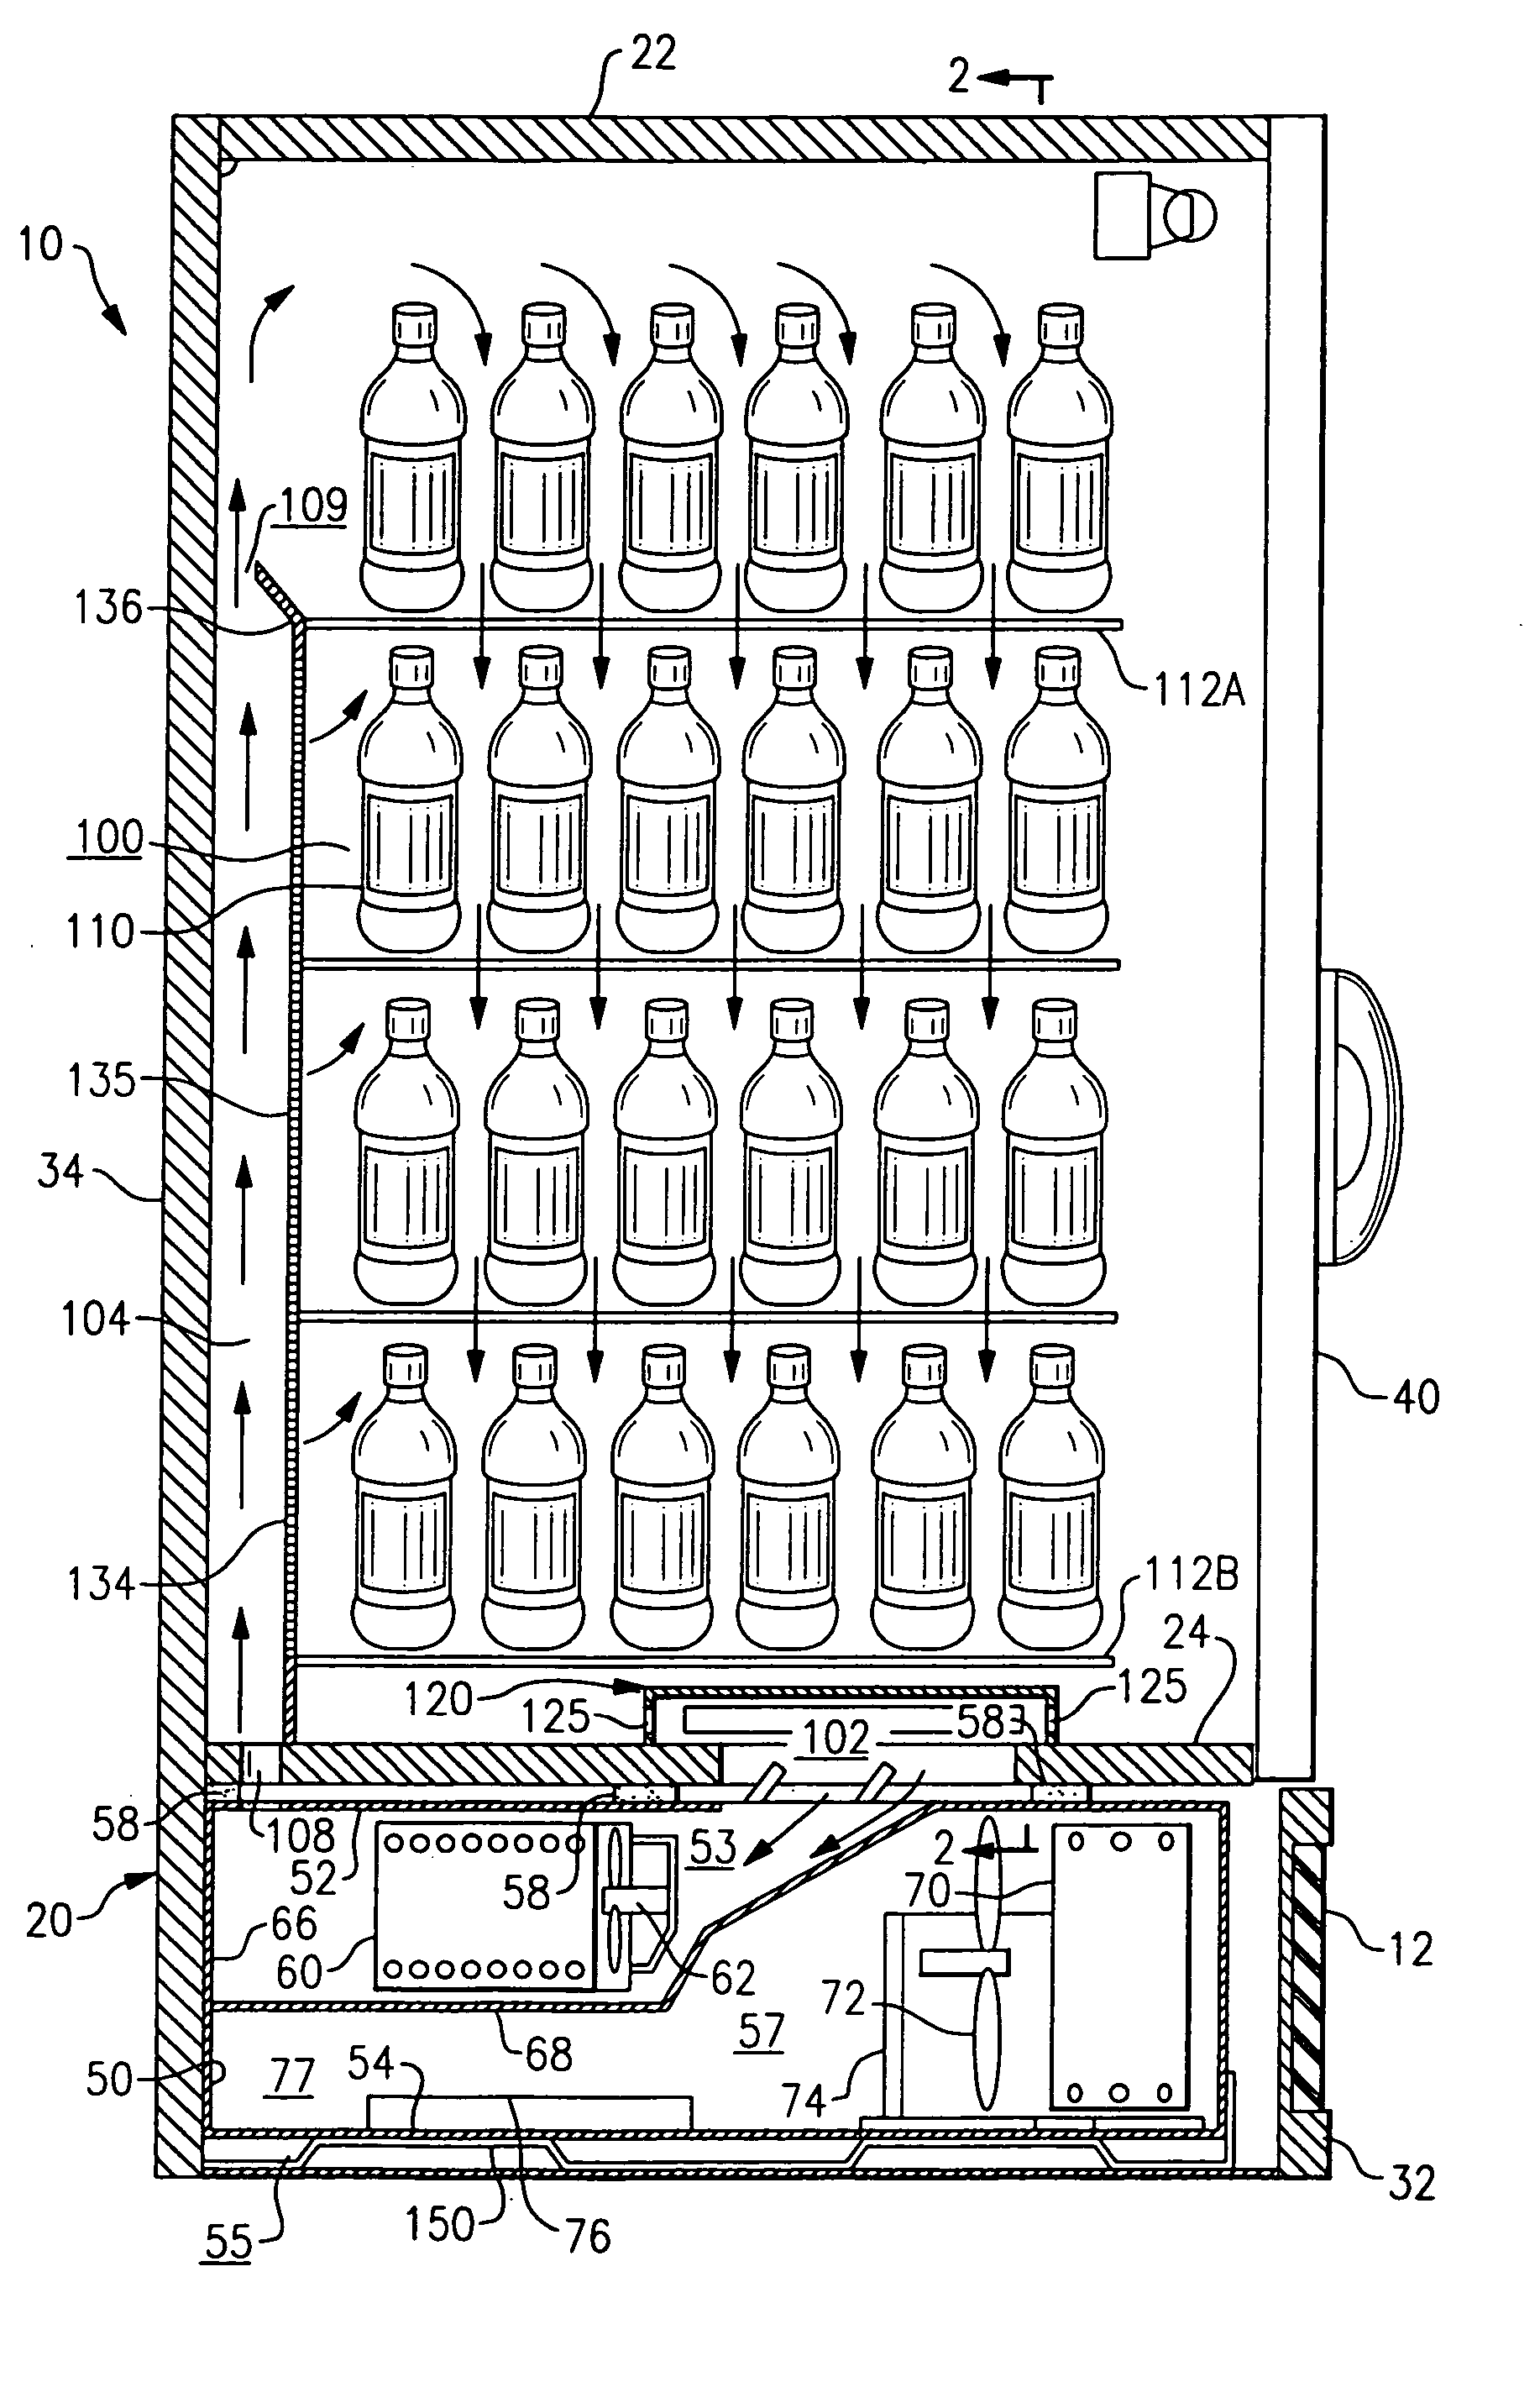 Modular refrigeration cassette with condensate evaporative tray